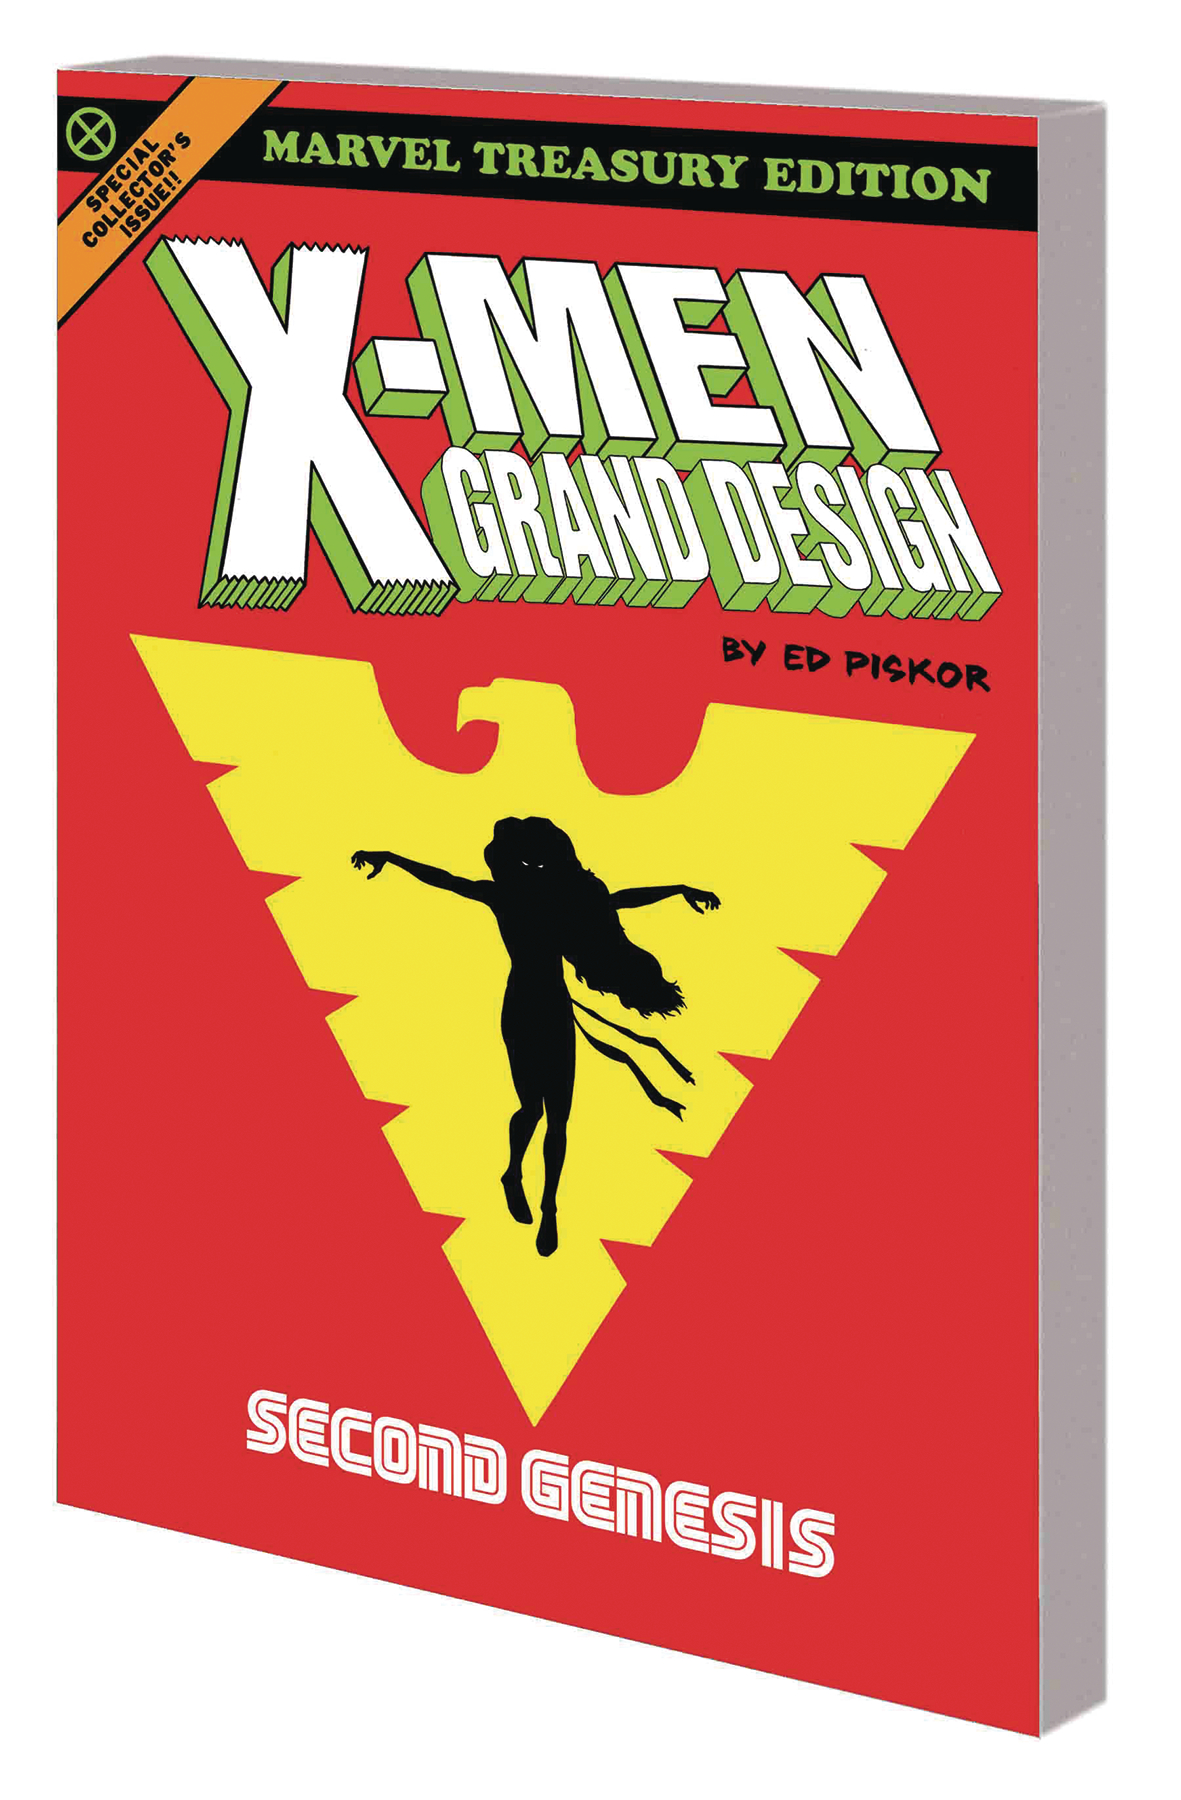 X-Men: Grand Design Second Genesis TP (2018) - Used